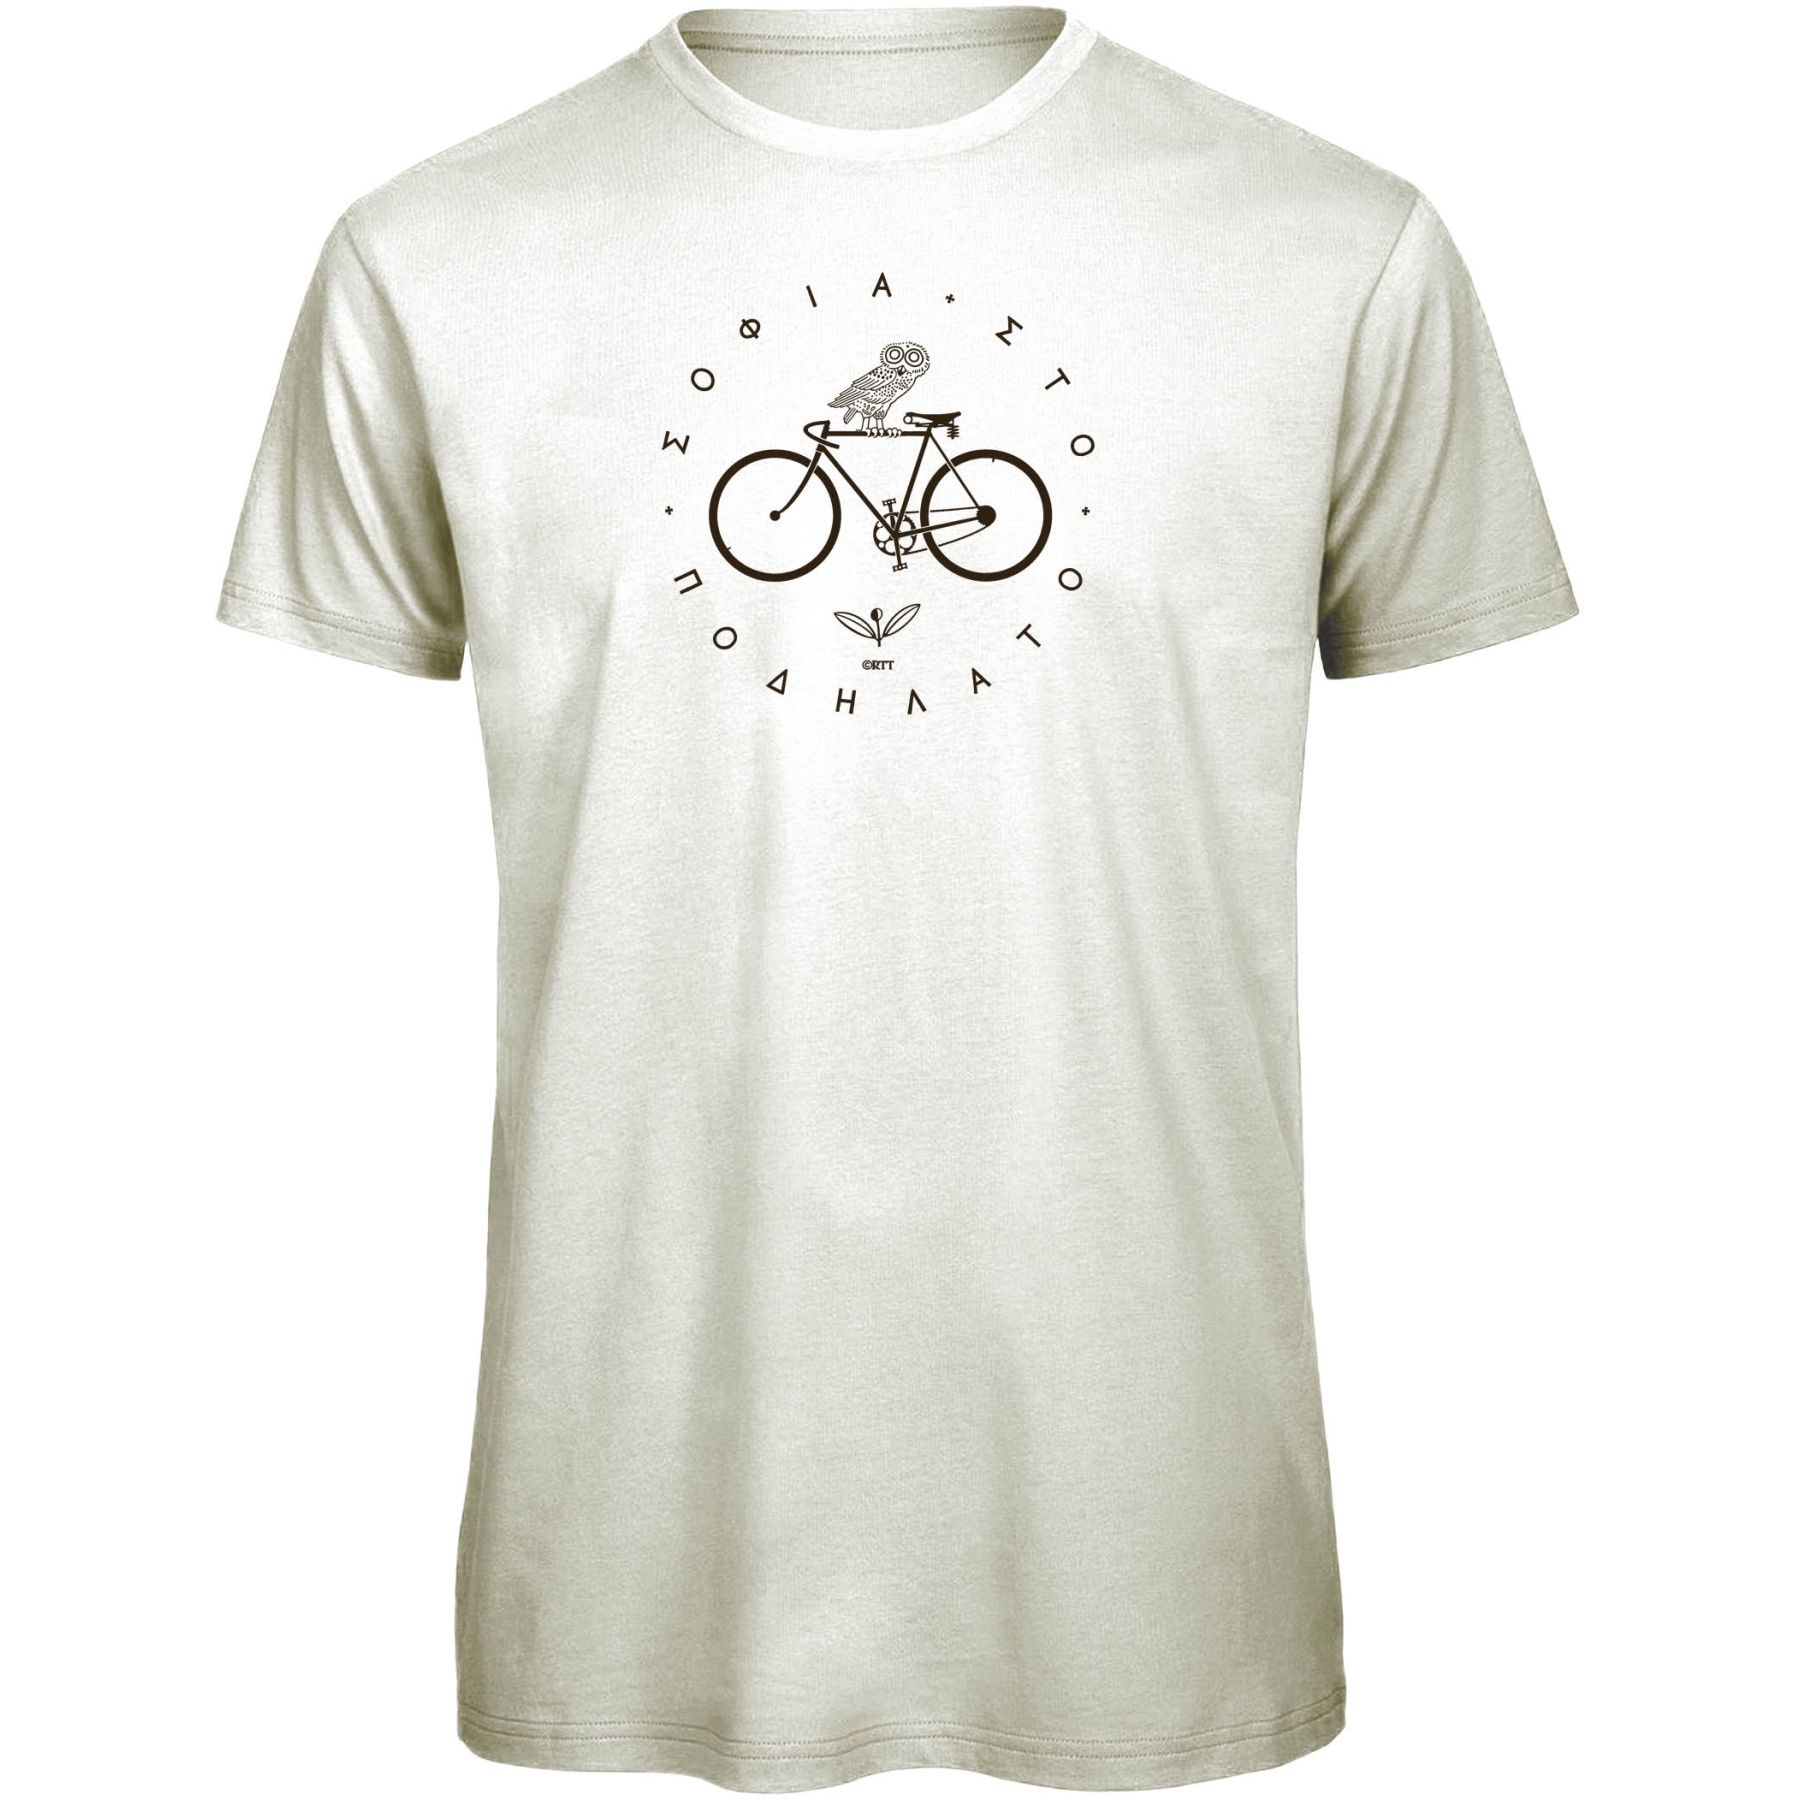 Foto de RTTshirts Camiseta Bicicleta - Minerva - blanco